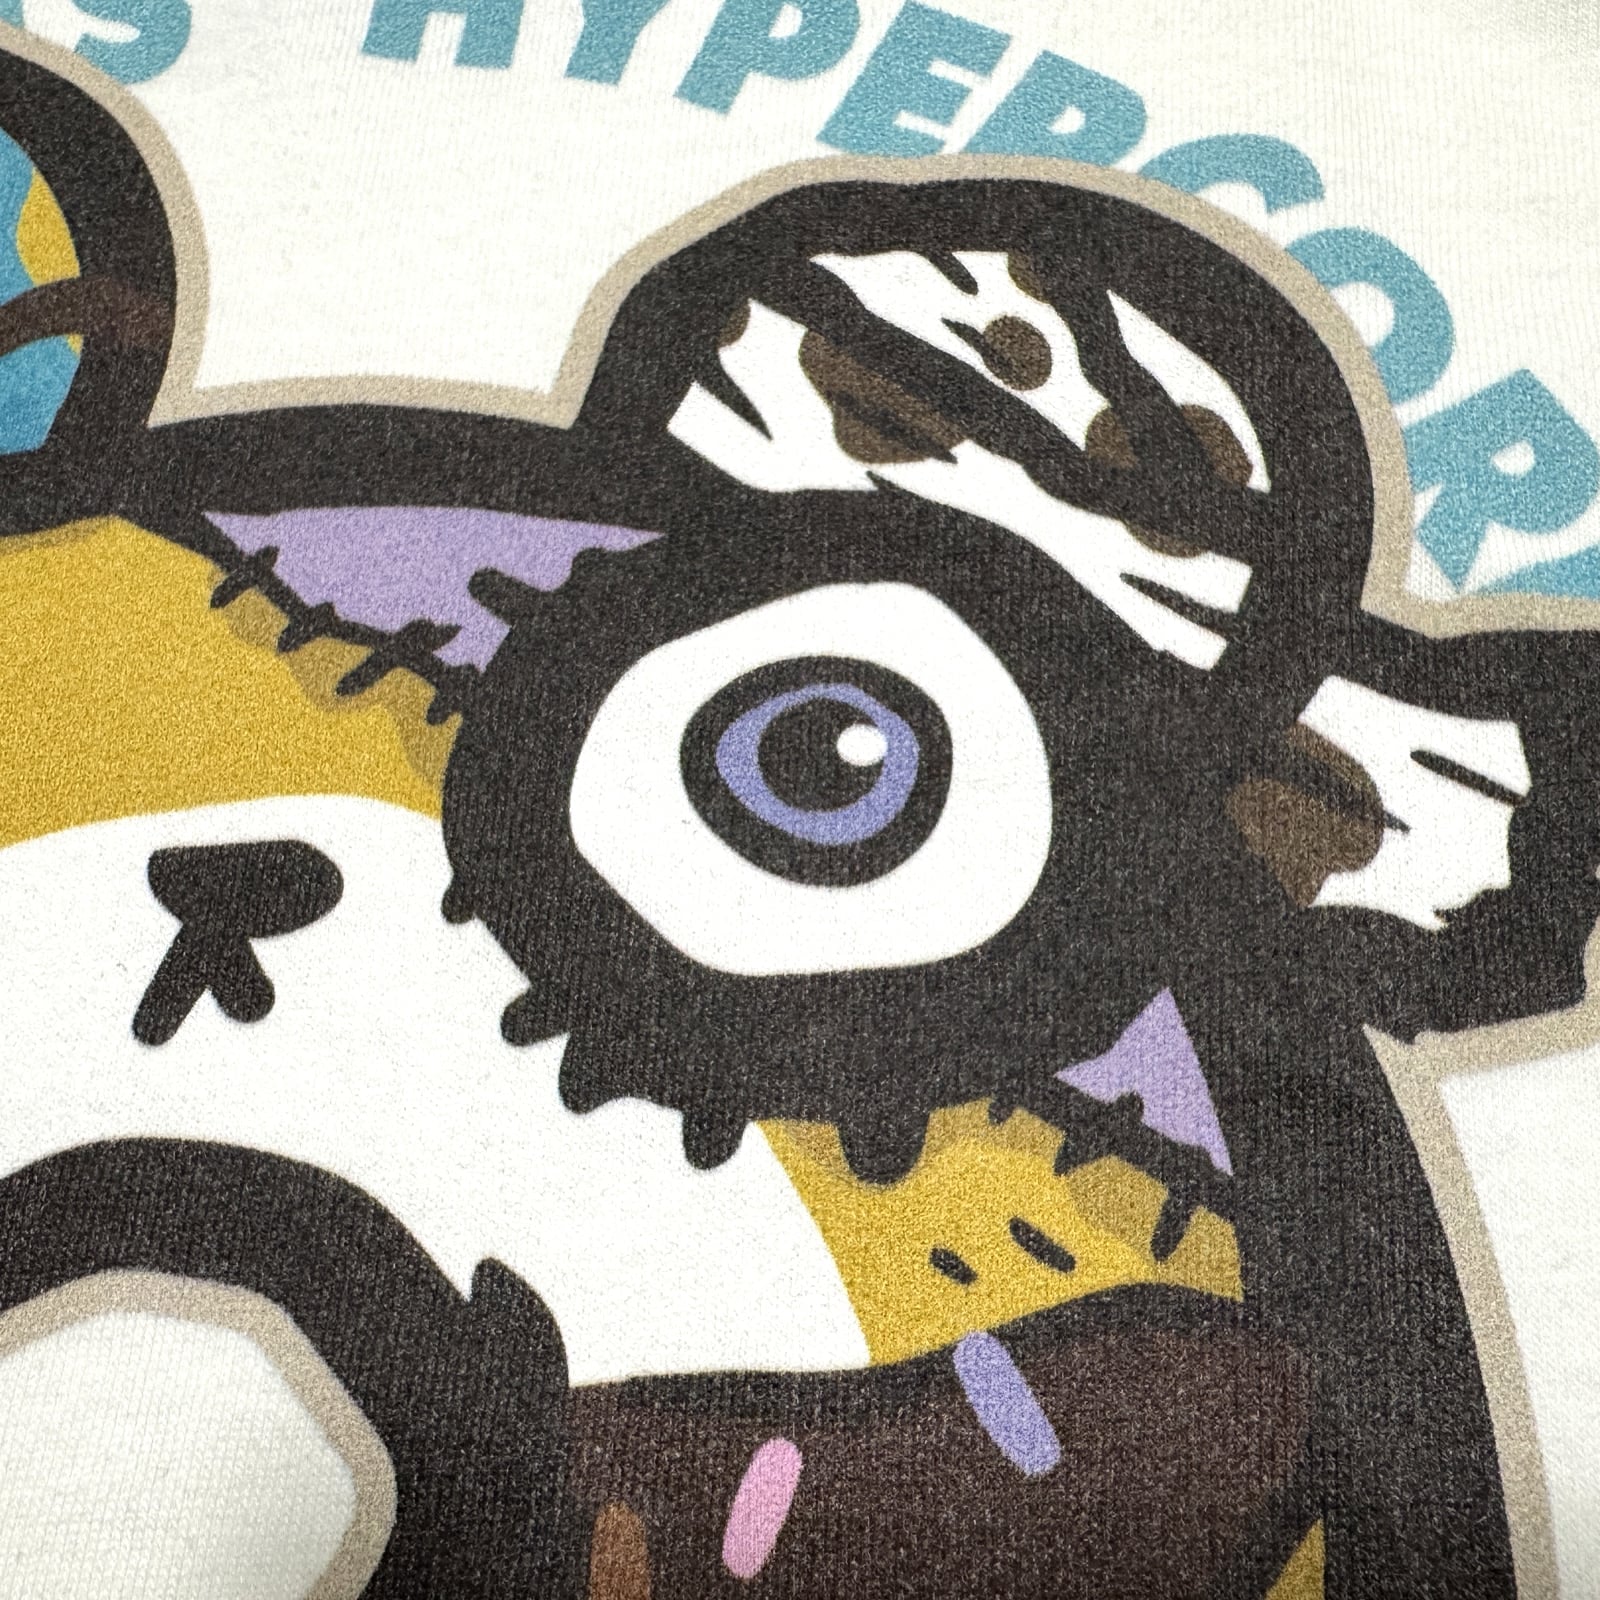 Hypercore "Donuts” t-shirt